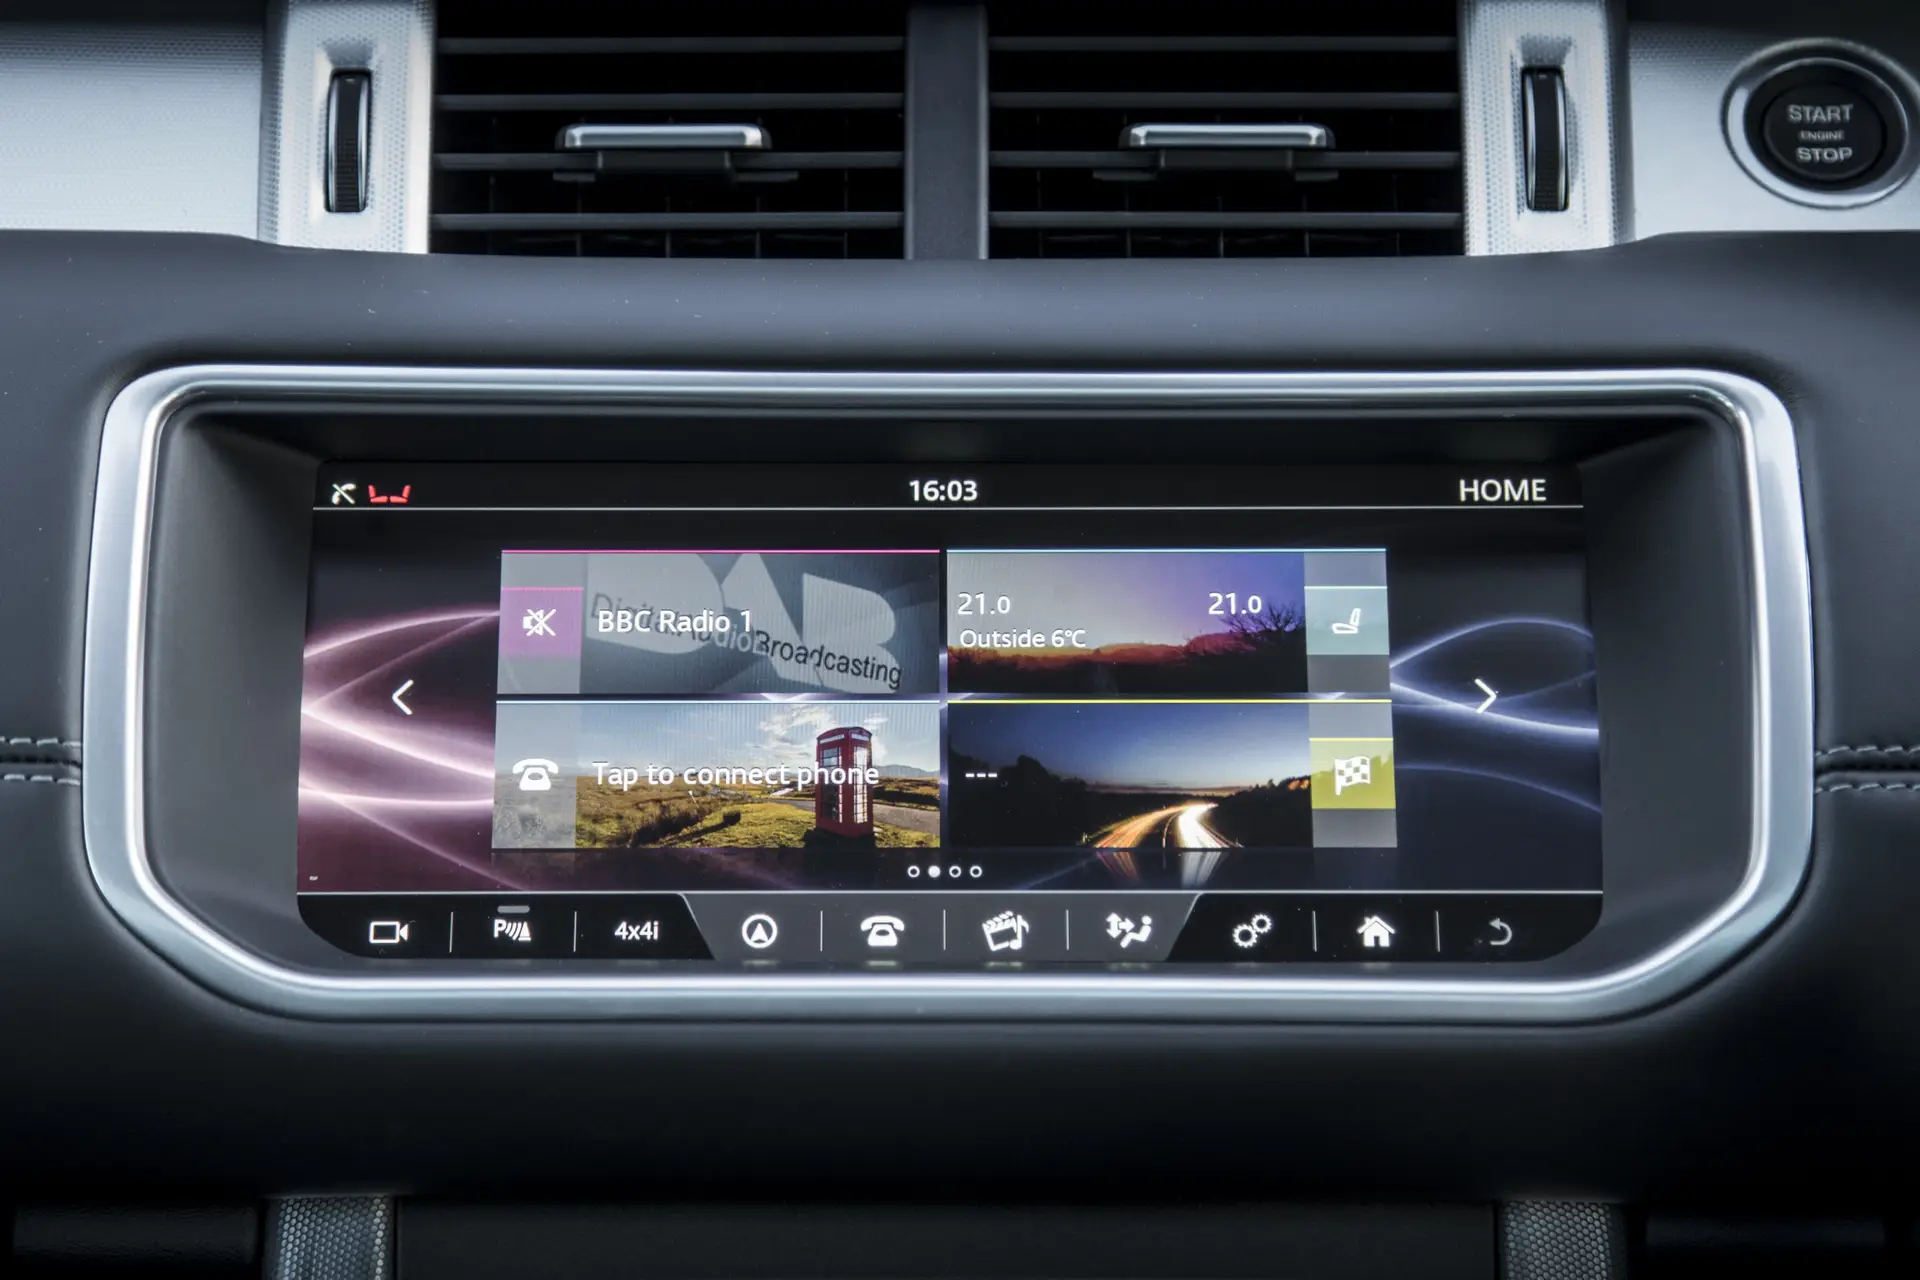 Range Rover Evoque (2011-2019) Review: interior close up photo of the Range Rover Evoque infotainment